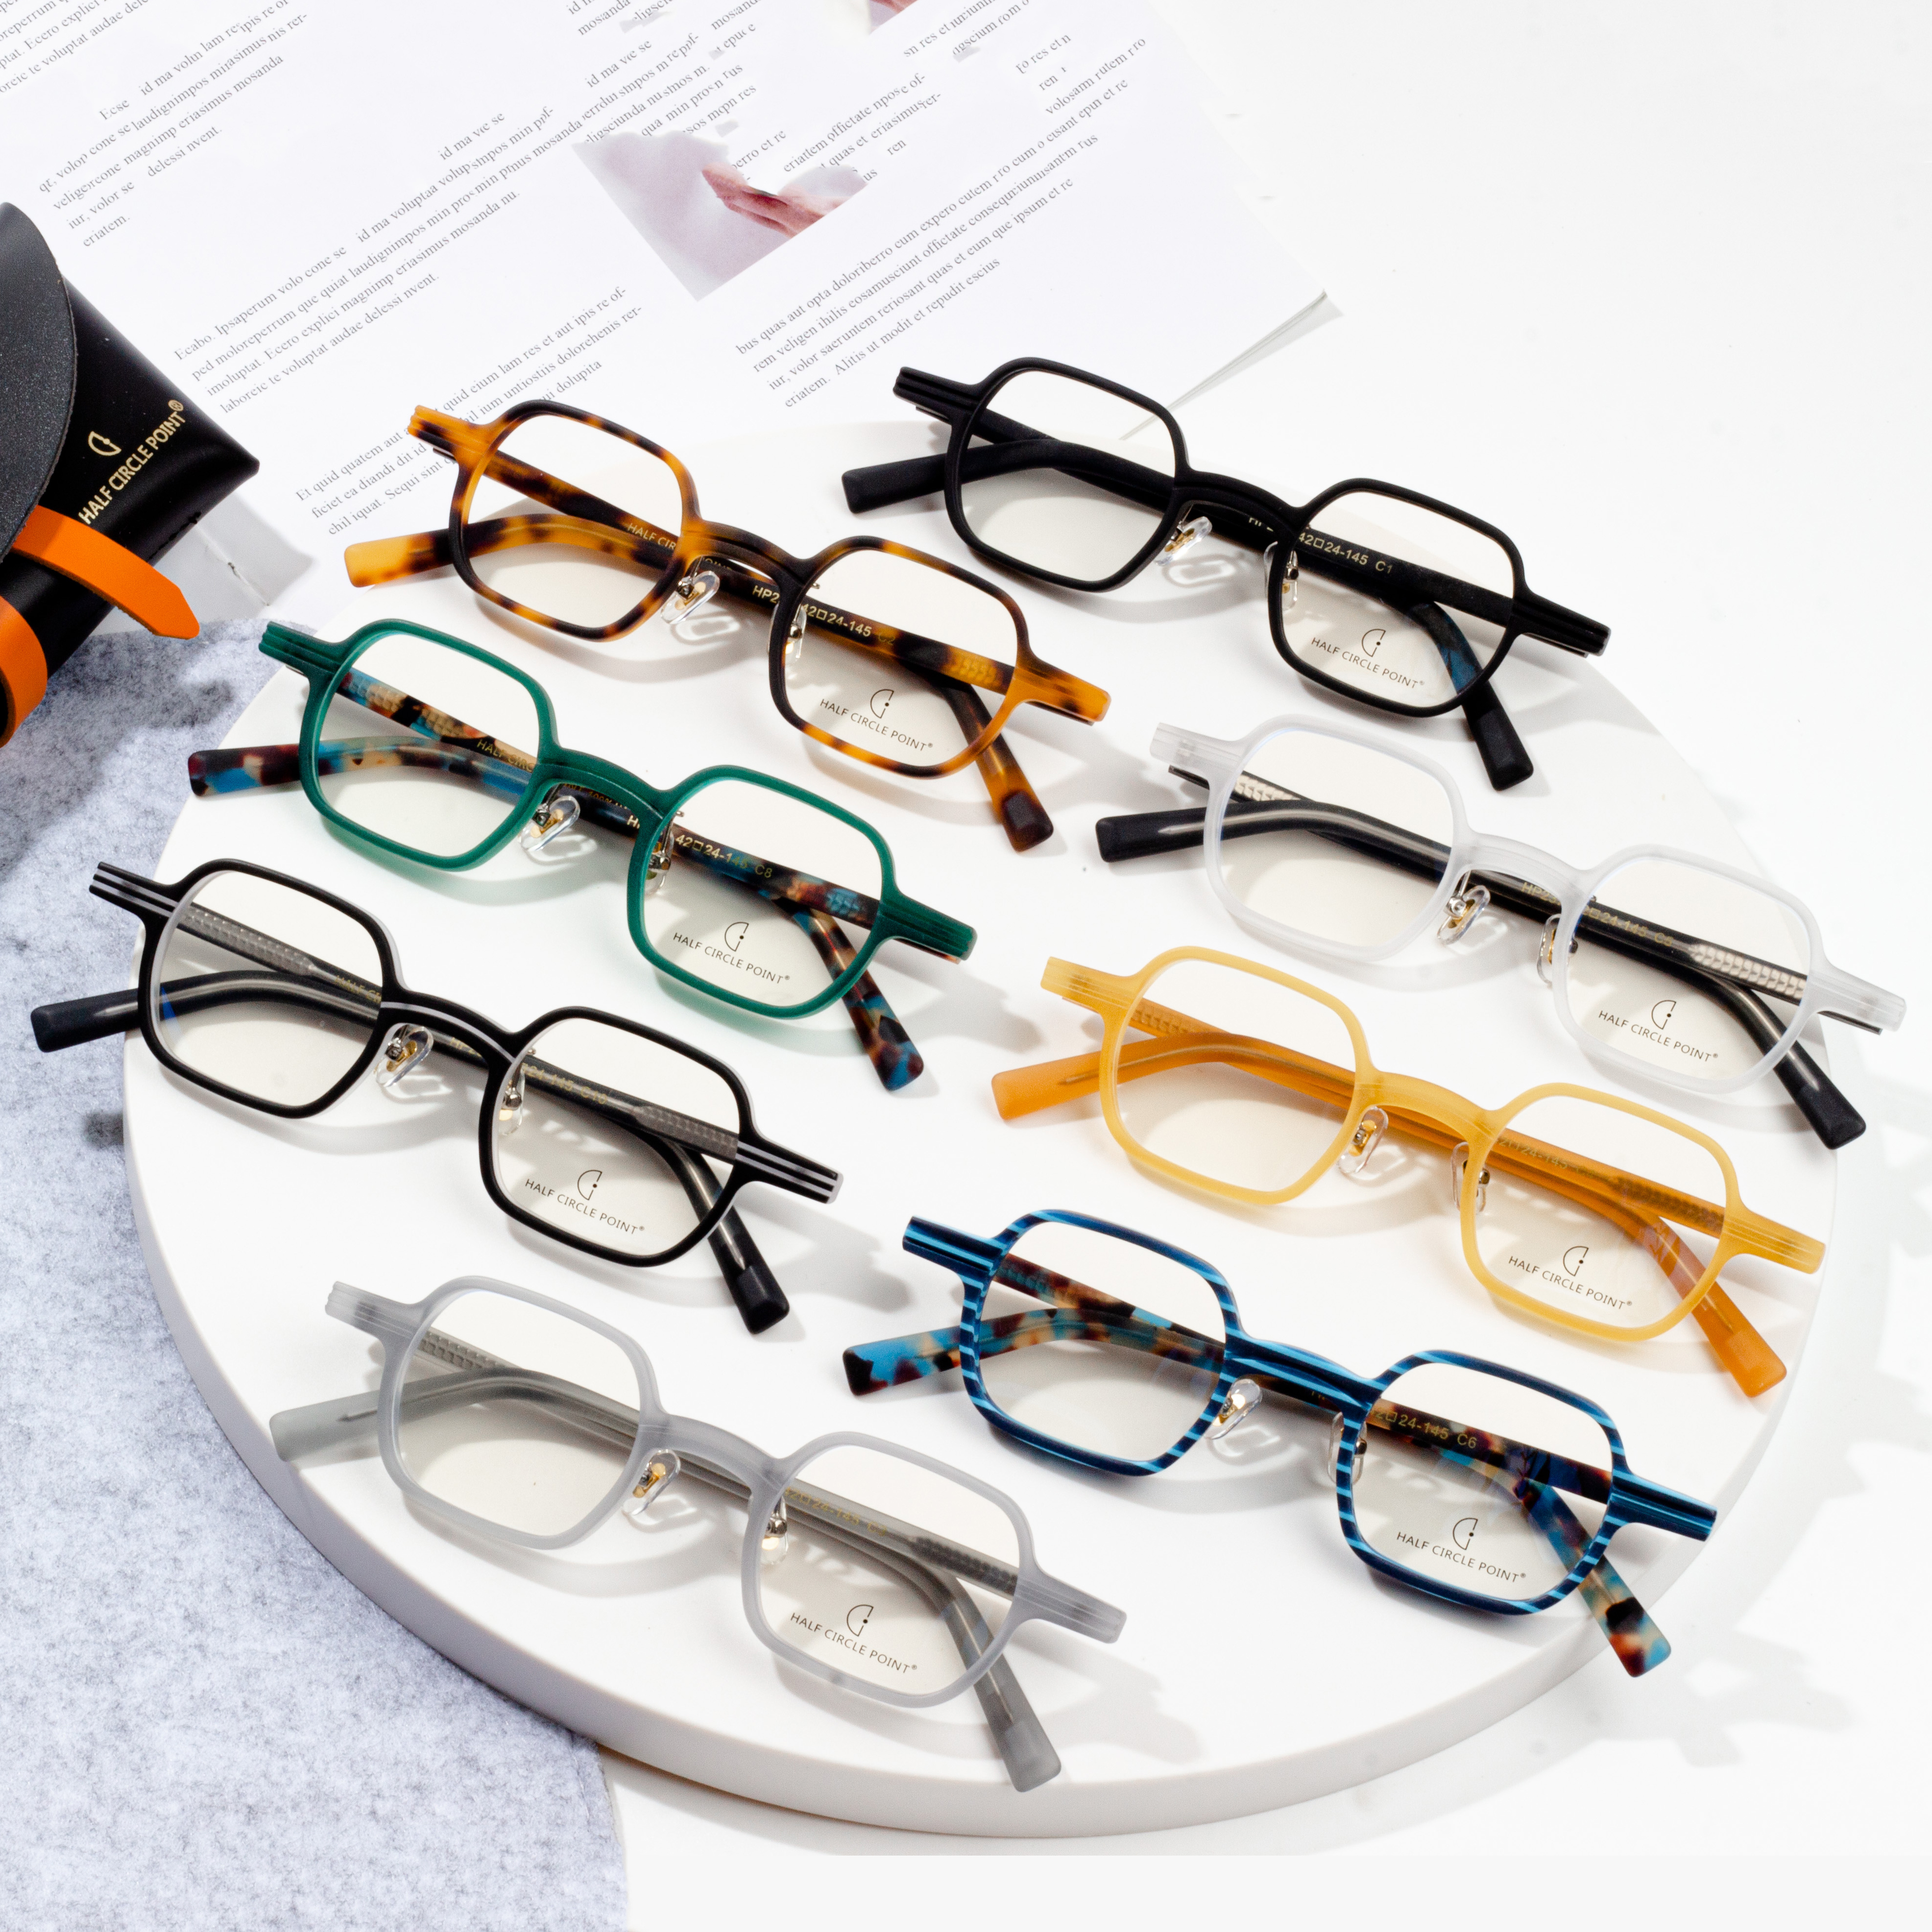 Kvalitetne uniseks acetatne naočale u modi